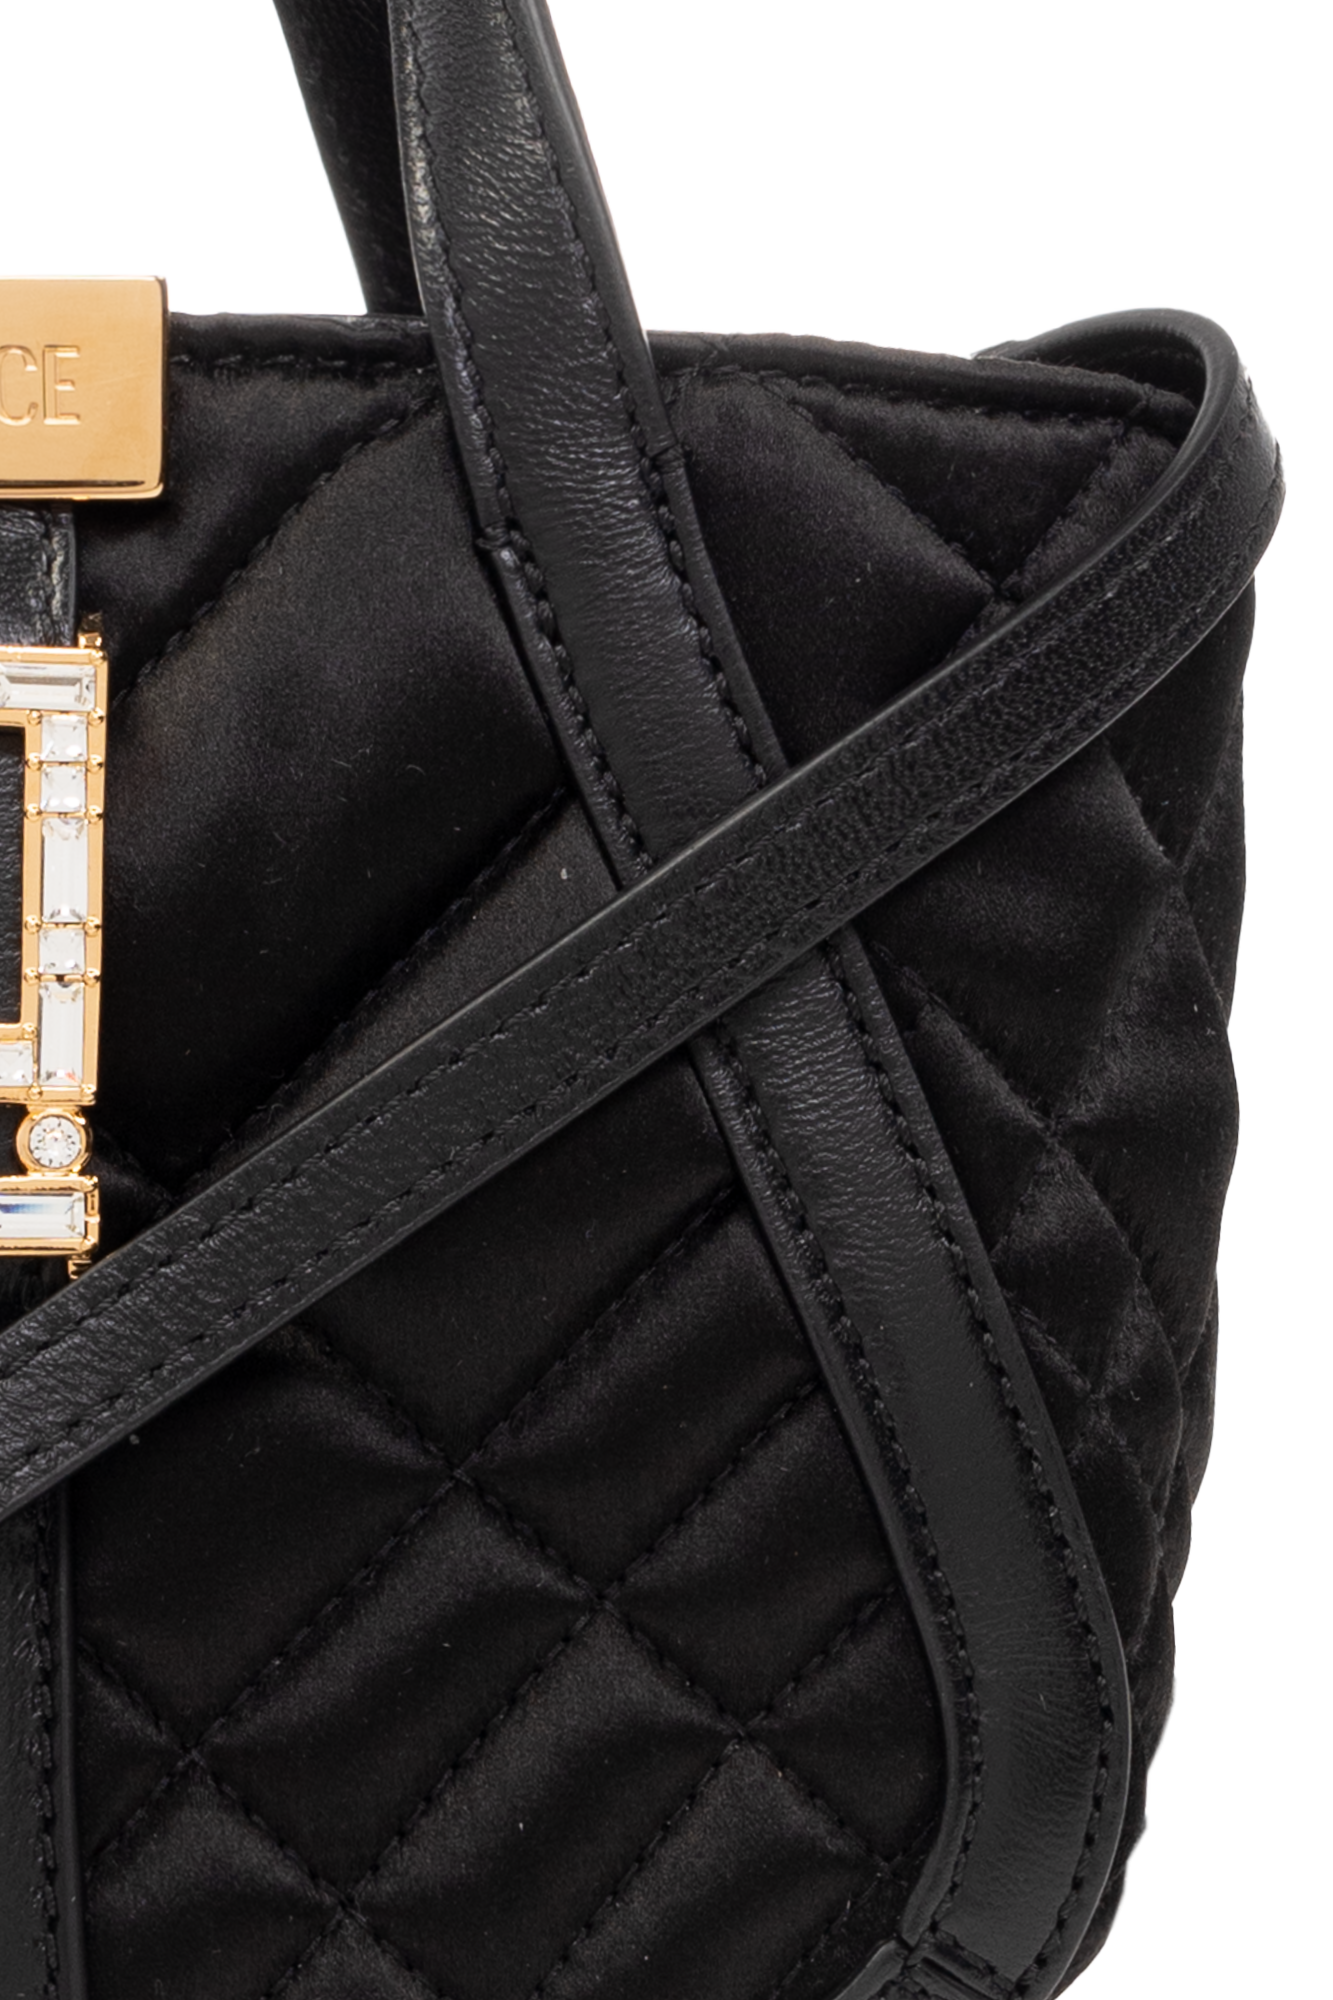 Greca Goddess Large Leather Tote Bag in Black - Versace